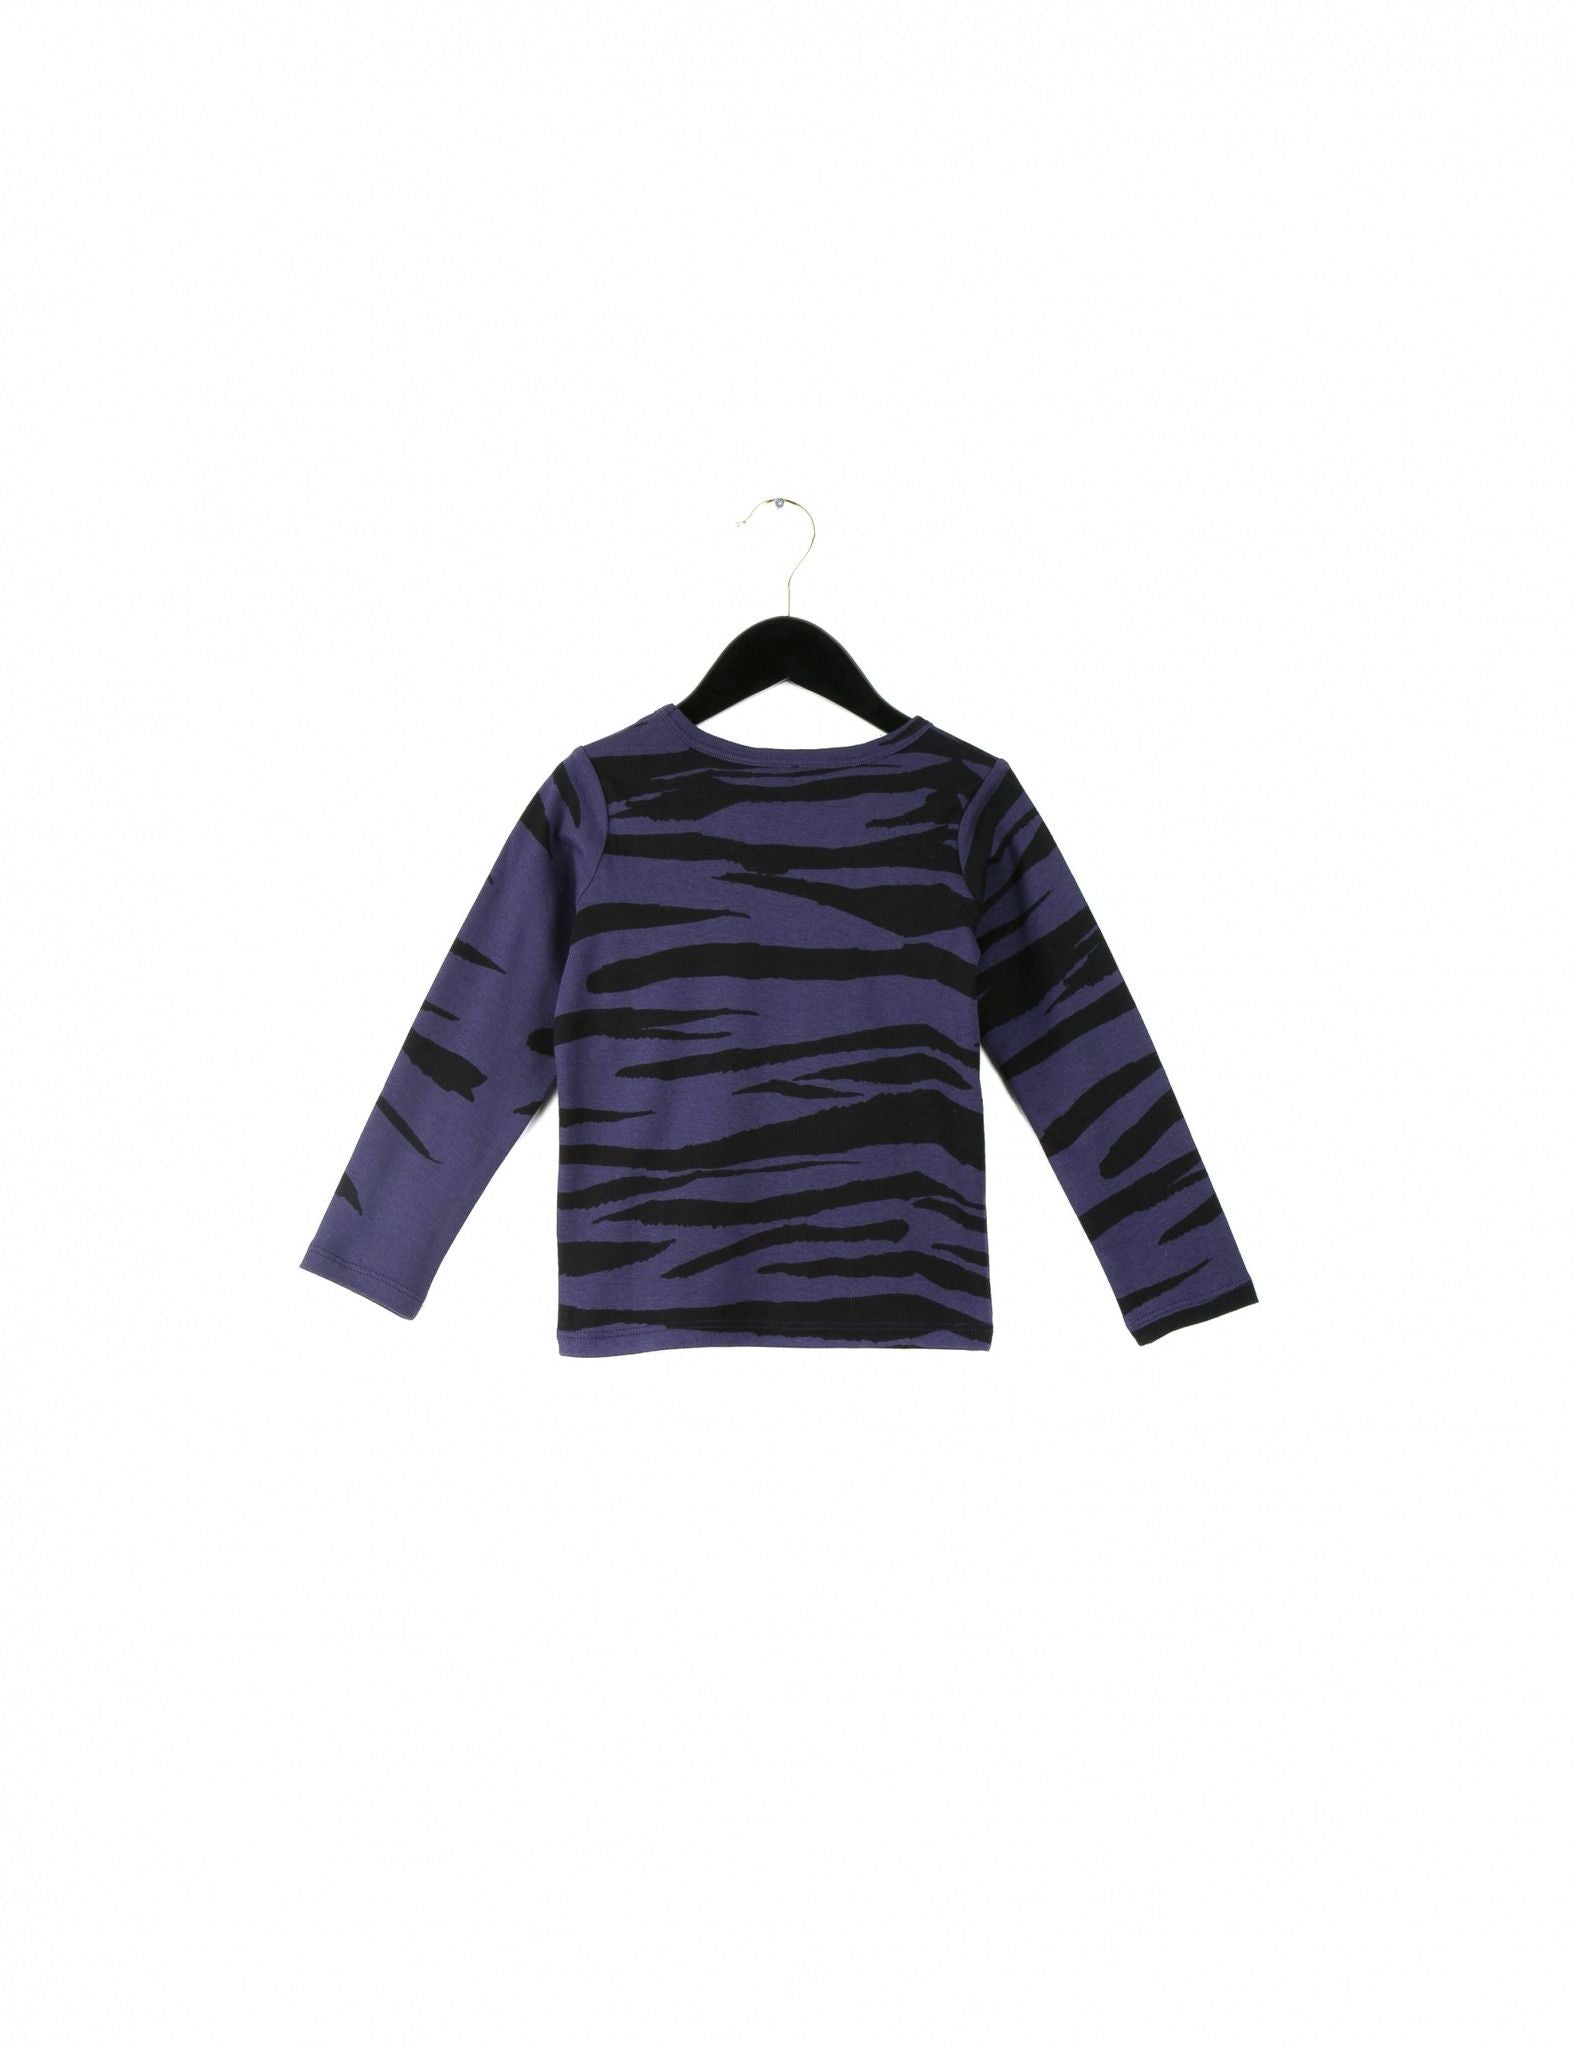 Tiger Dk Blue Stripes Long Sleeve T-Shirt - CÉMAROSE | Children's Fashion Store - 2